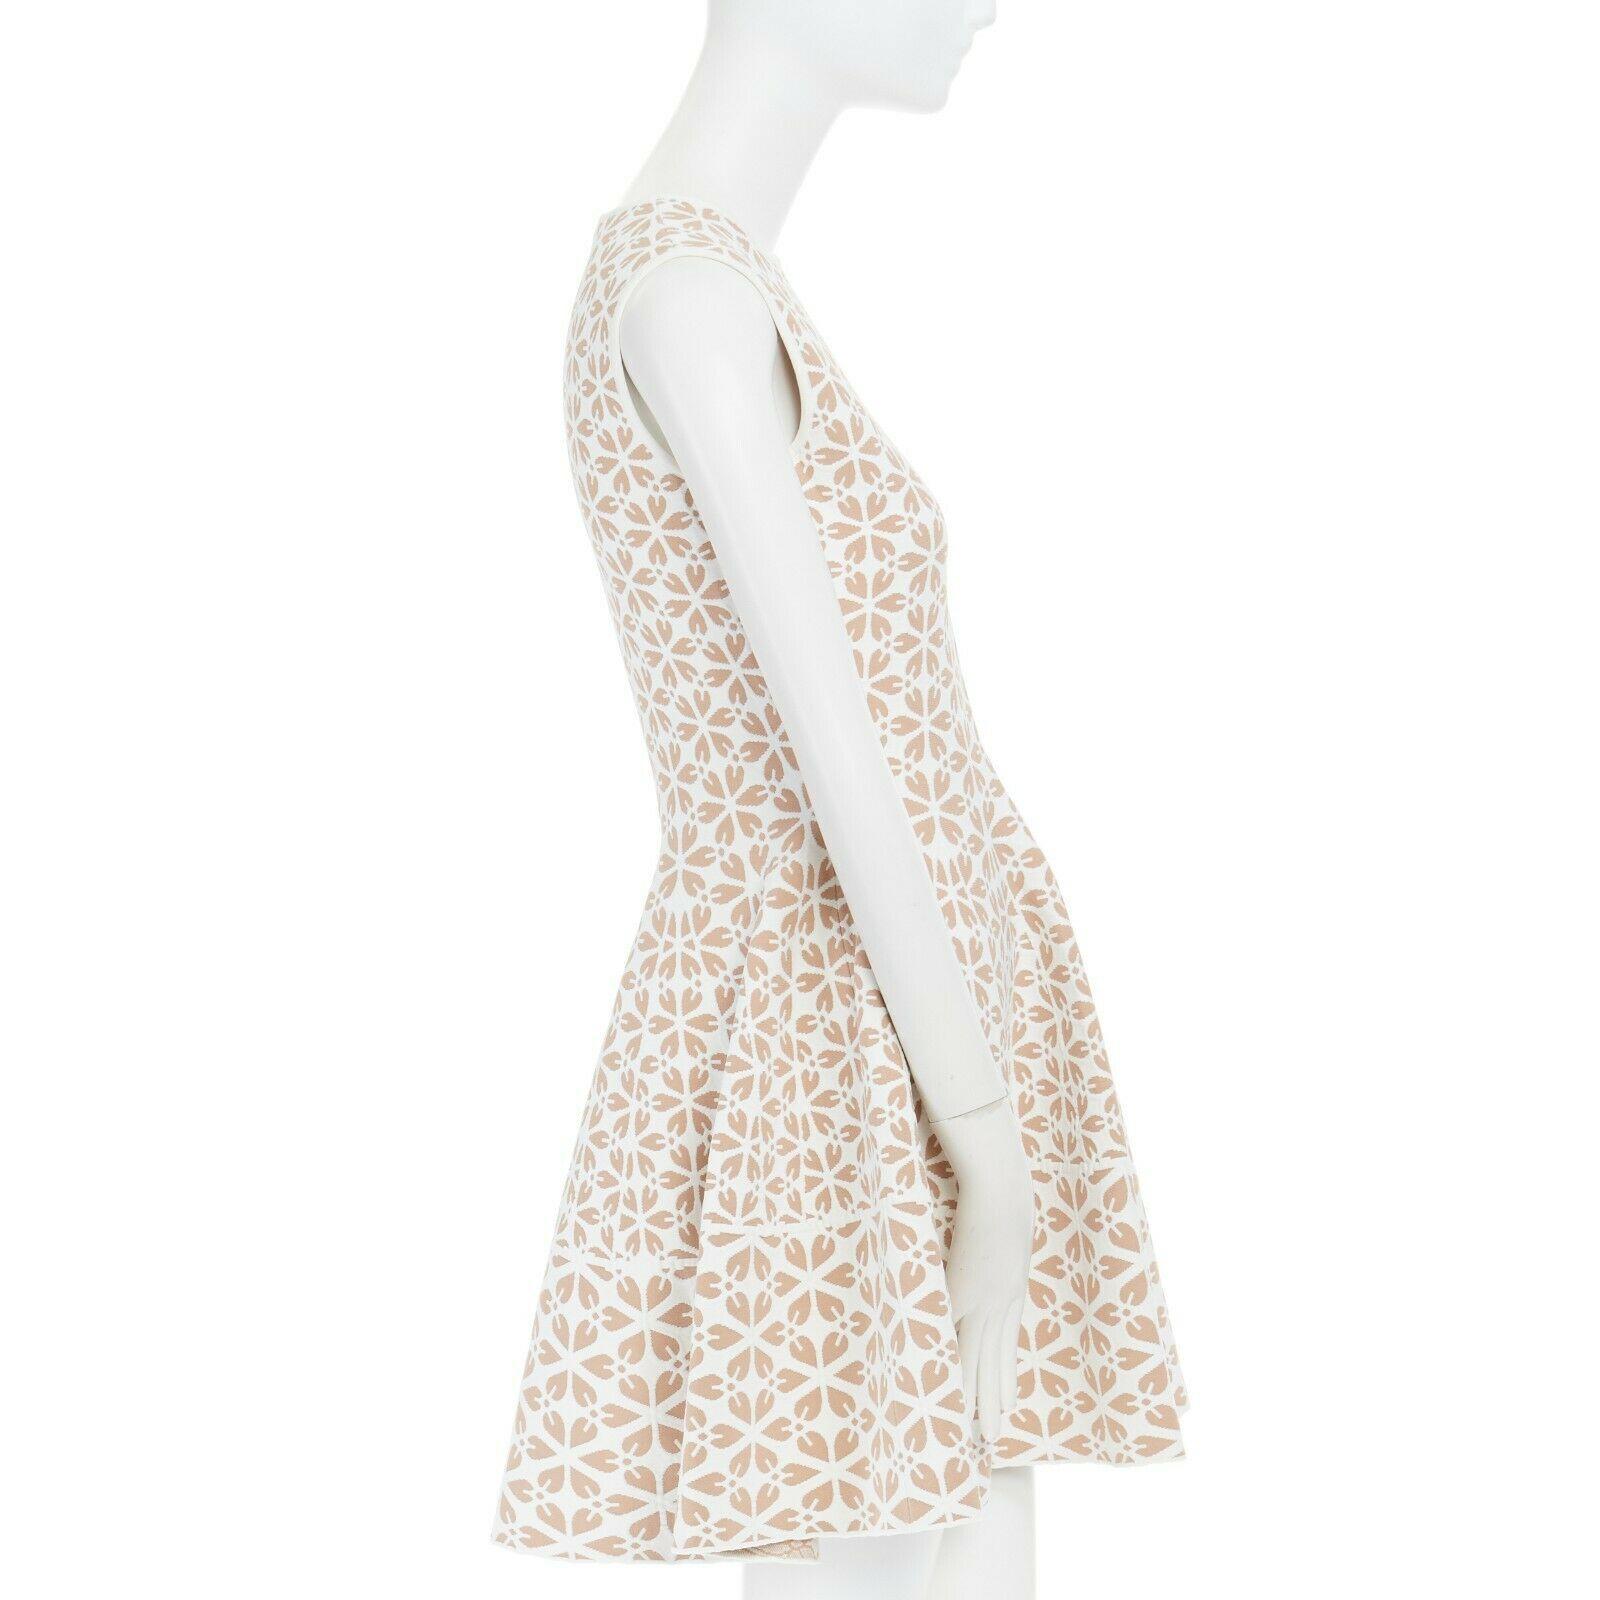 Women's ALEXANDER MCQUEEN white nude geomtric leaf pattern jacquard fit flare dress M